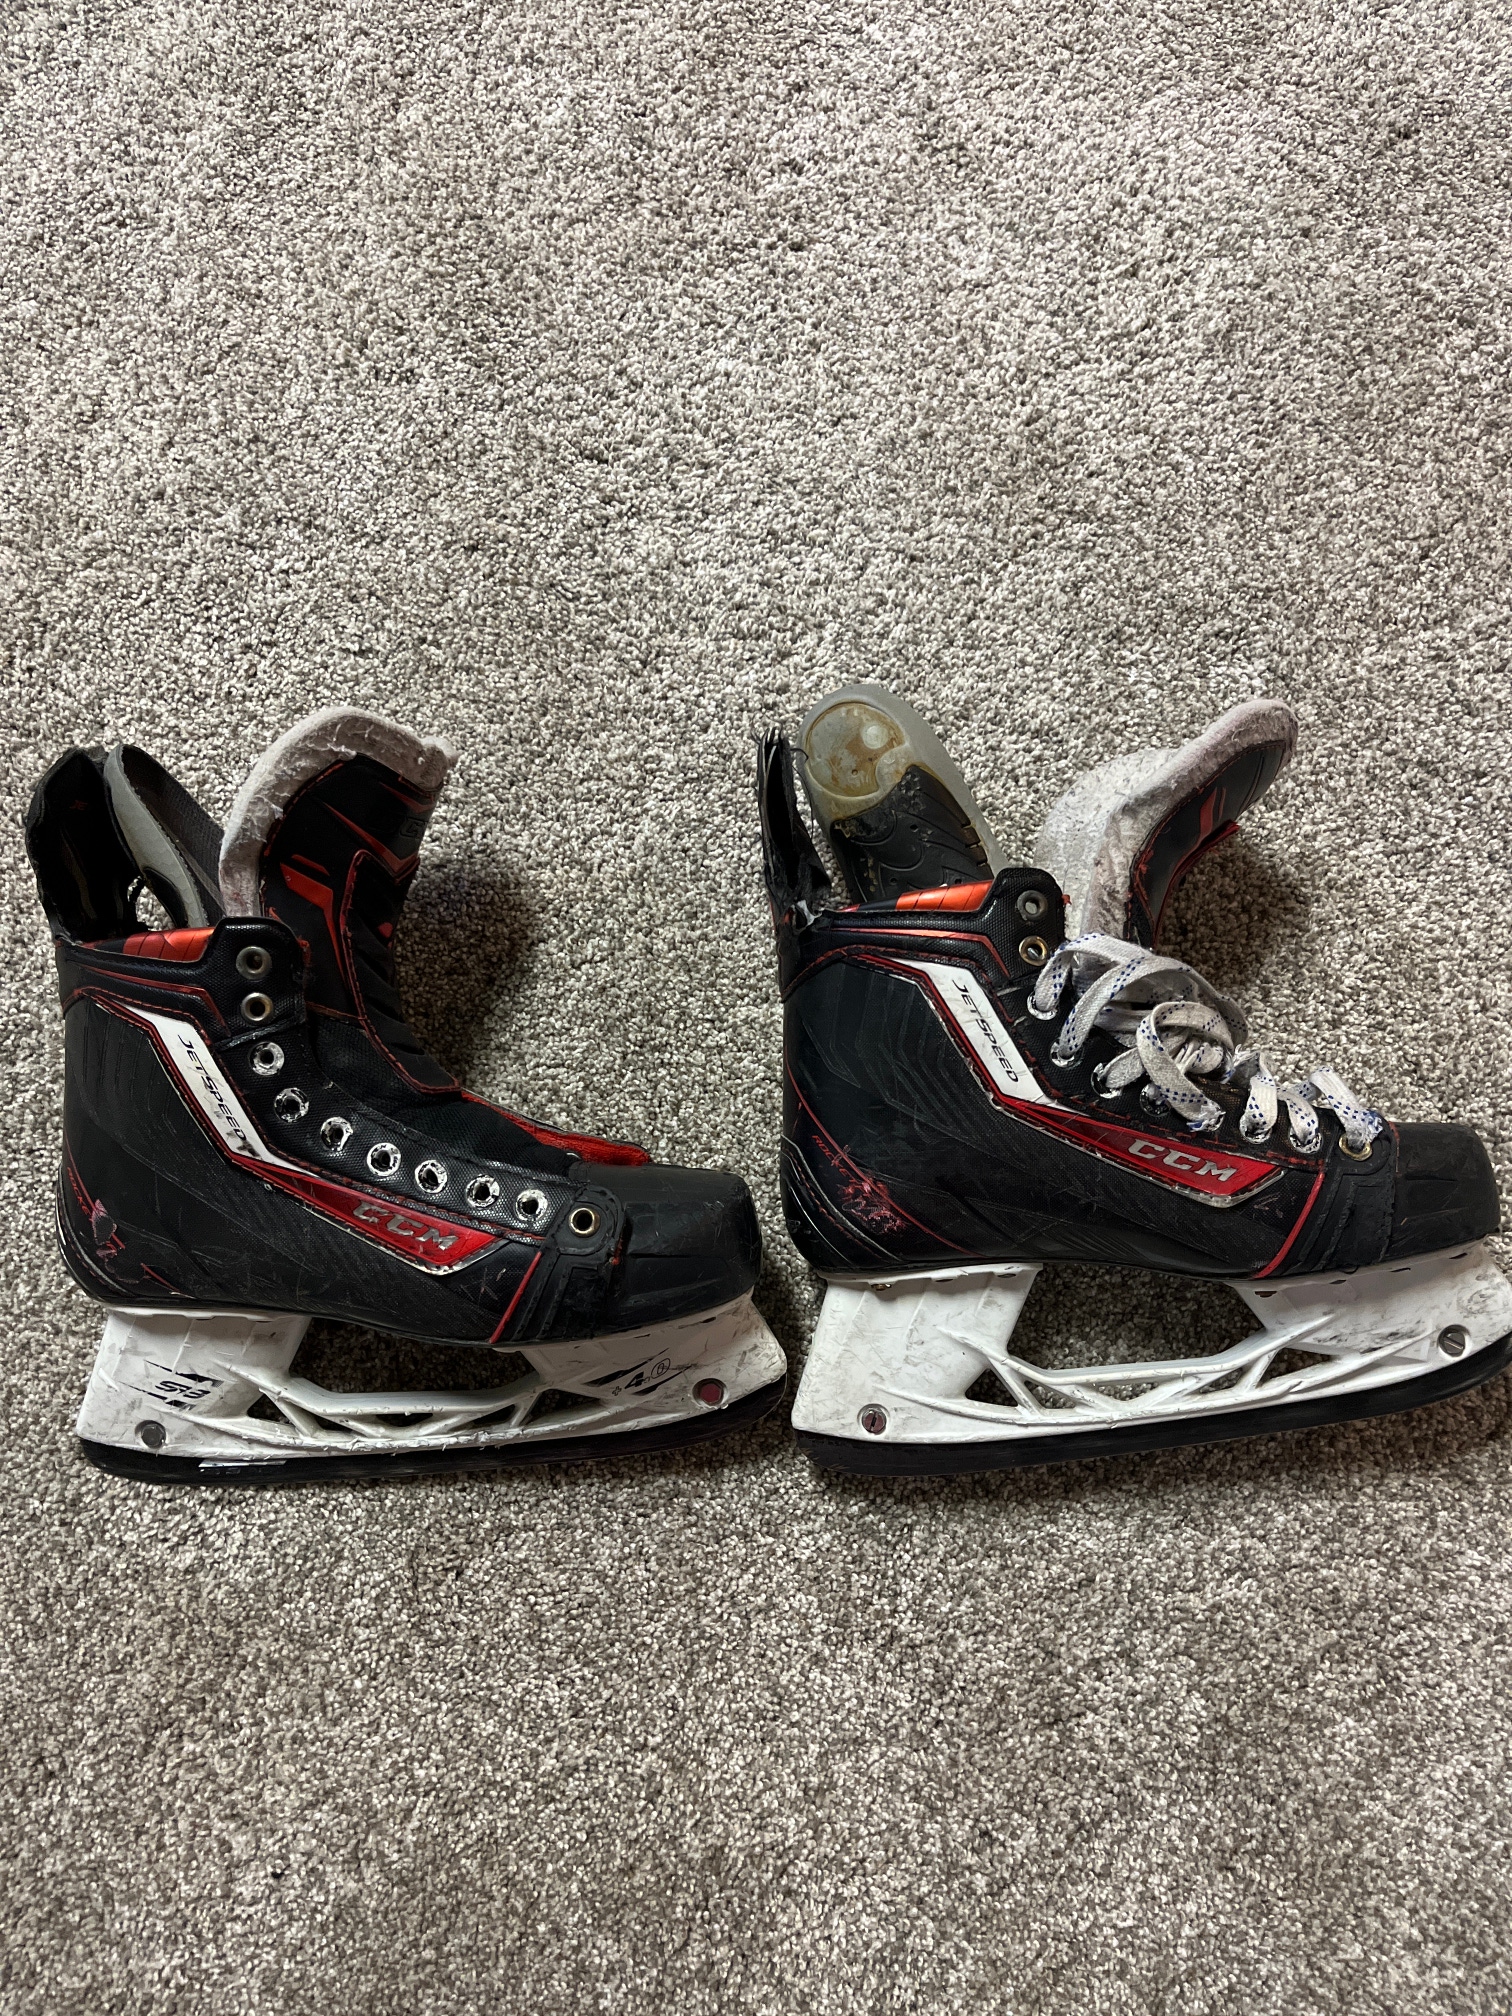 Senior Used CCM JetSpeed FT1 Hockey Skates Regular Width Size 7